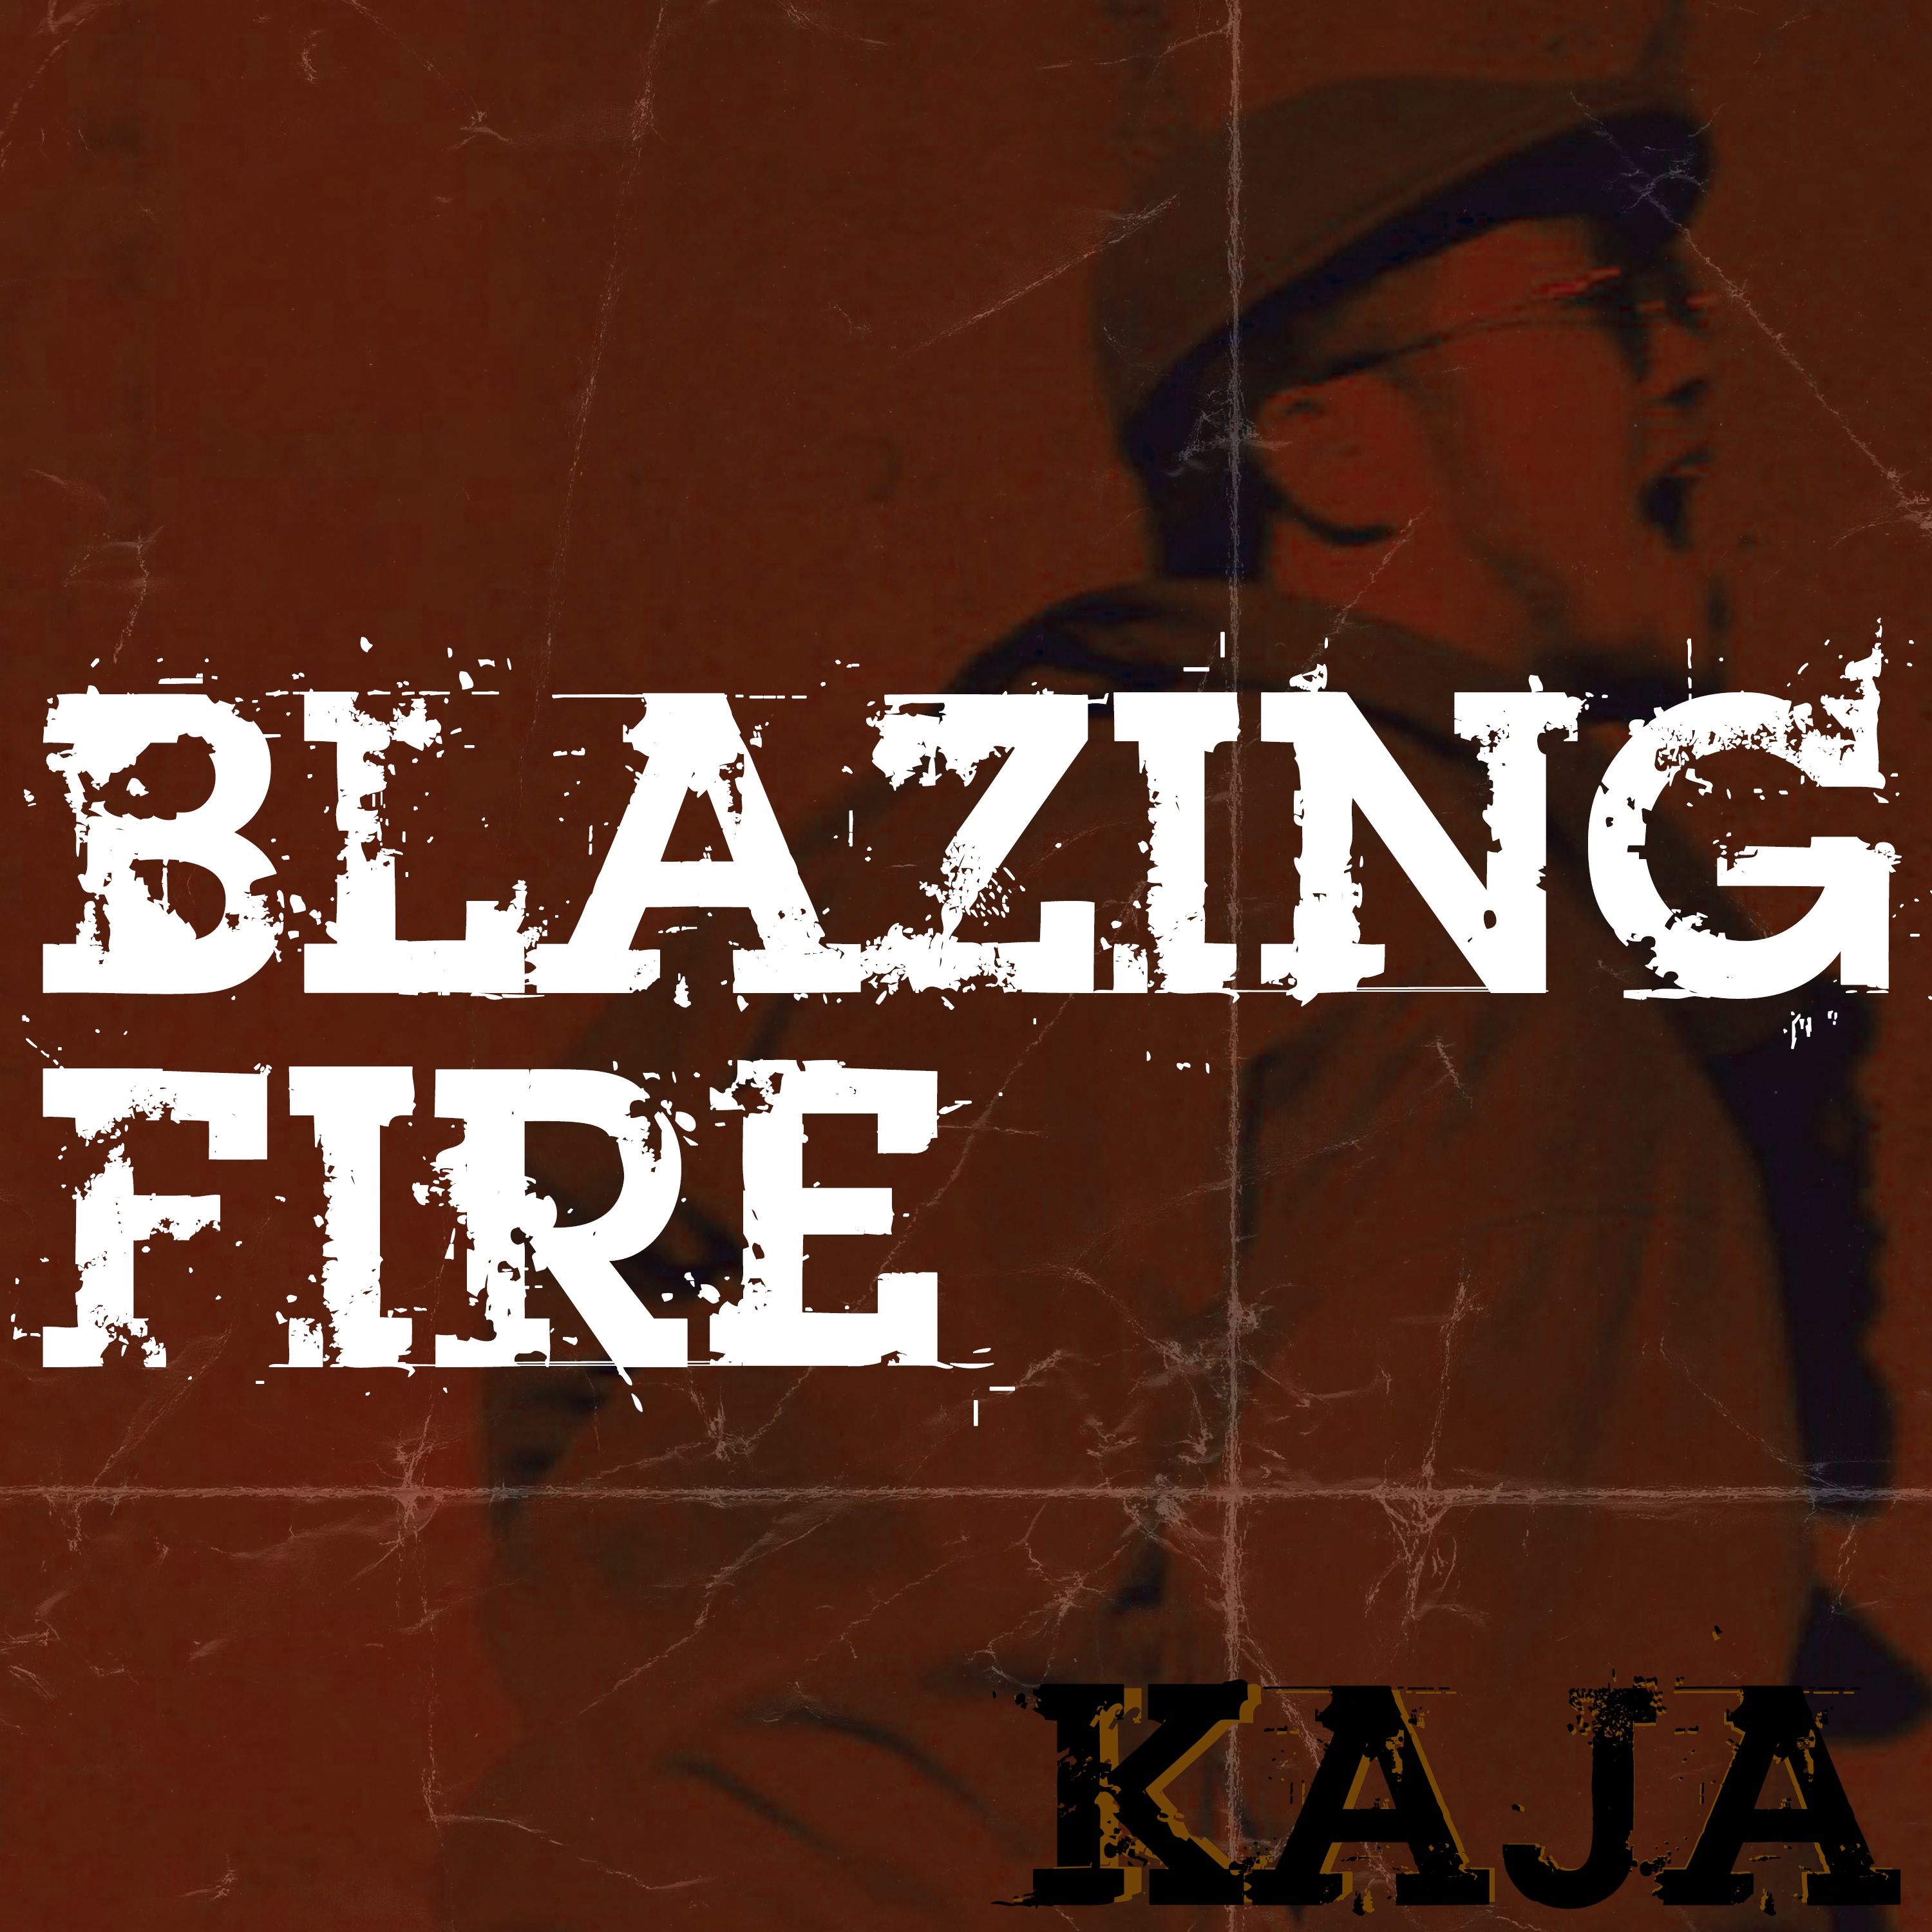 BLAZING FIRE